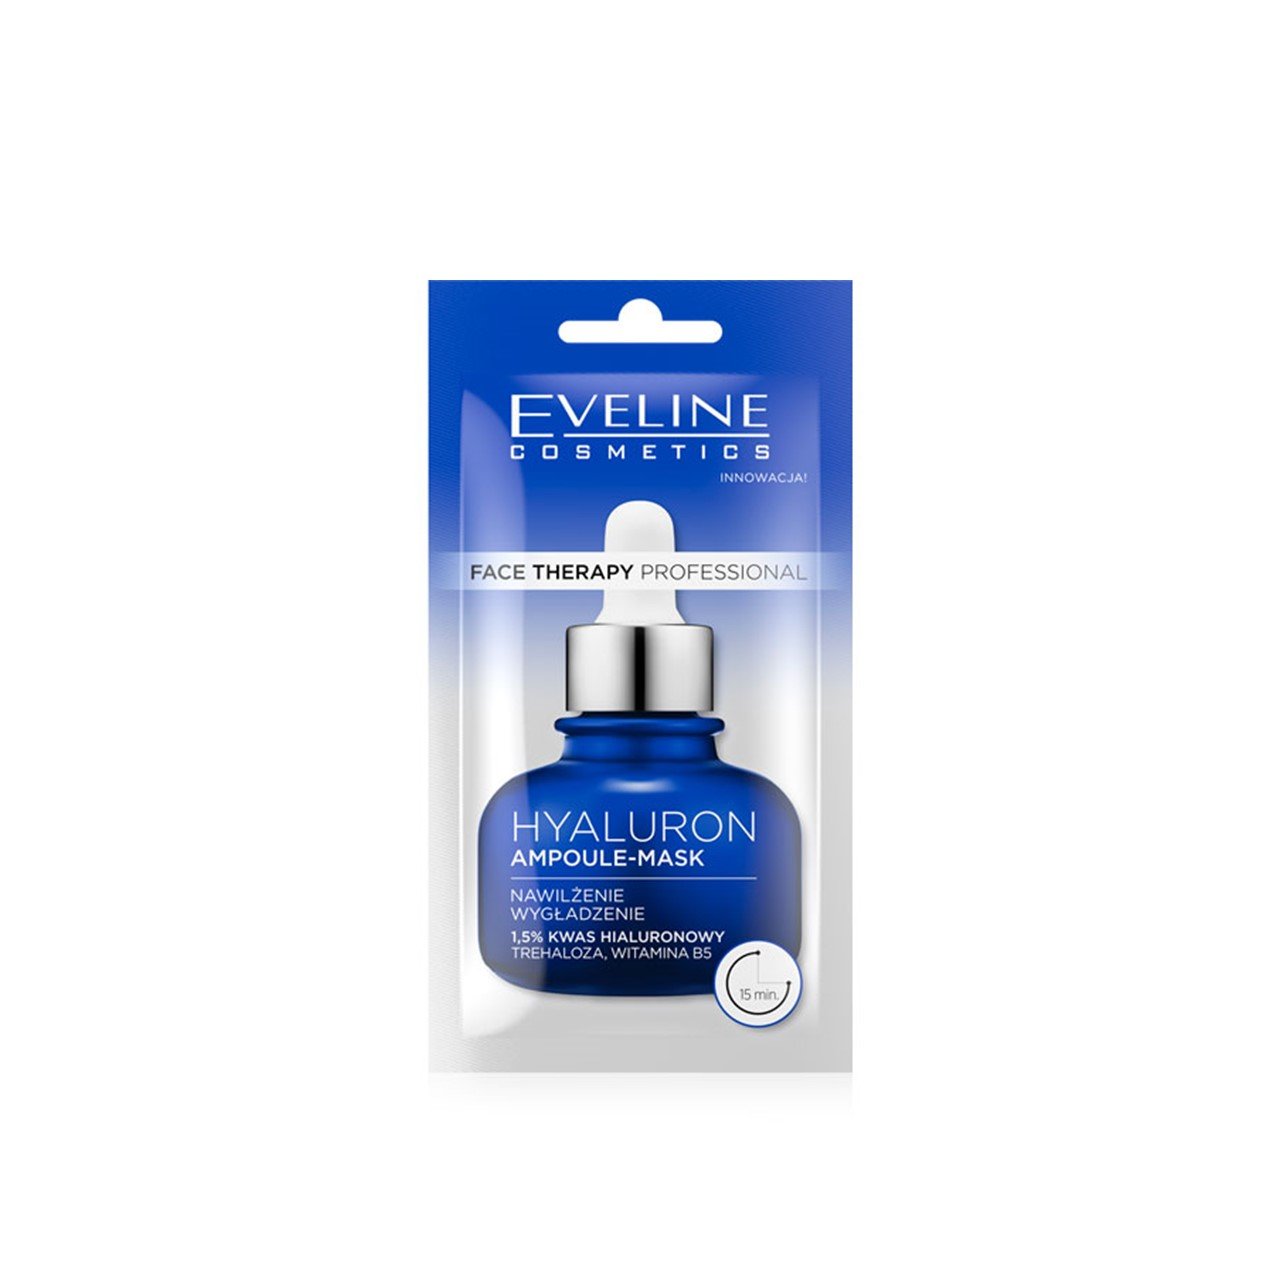 Eveline Cosmetics Hyaluron Ampoule-Mask 8ml (0.28 fl oz)